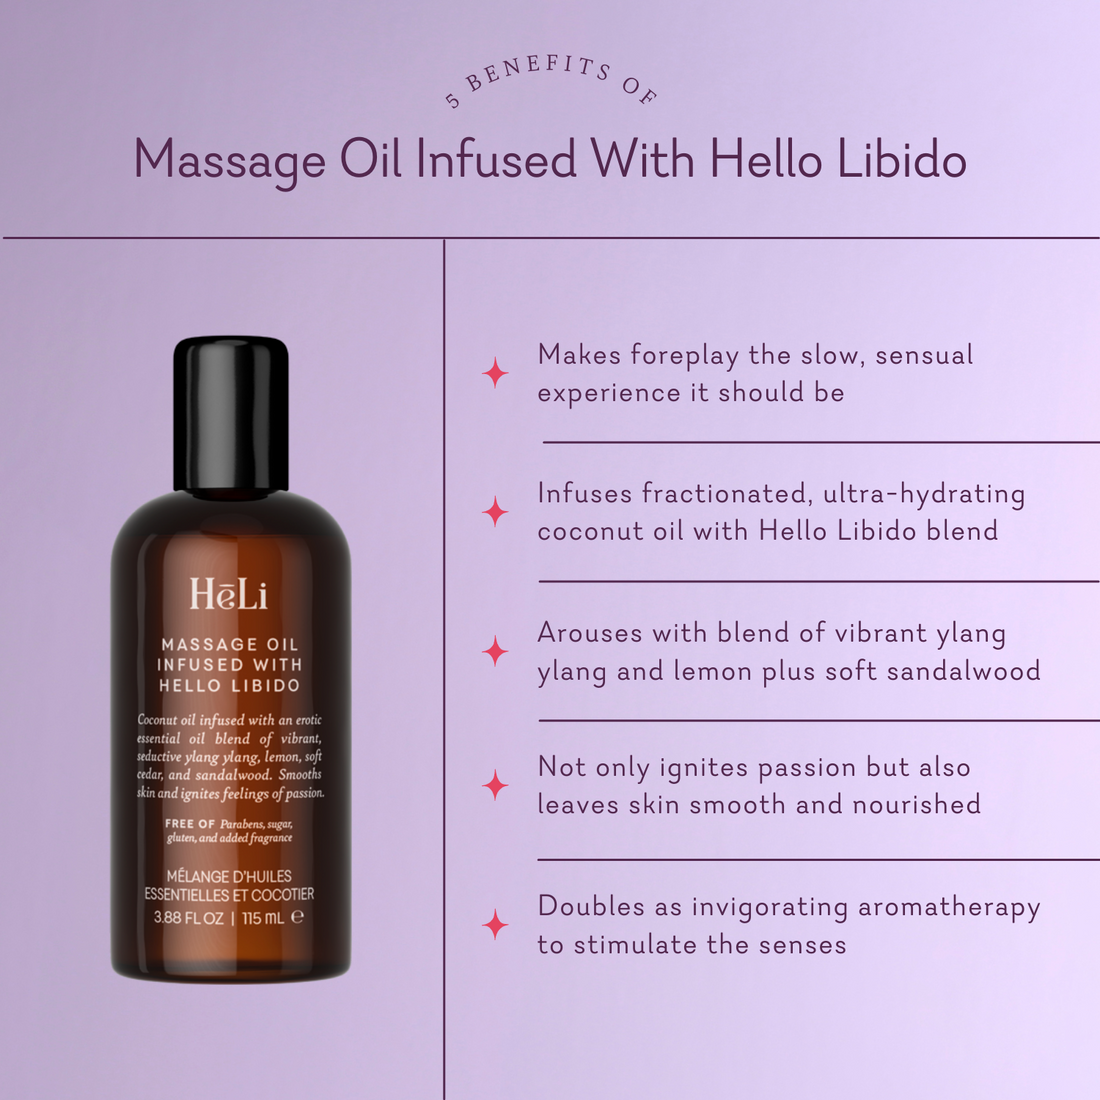 HēLi - Massage Oil Infused With Hello Libido